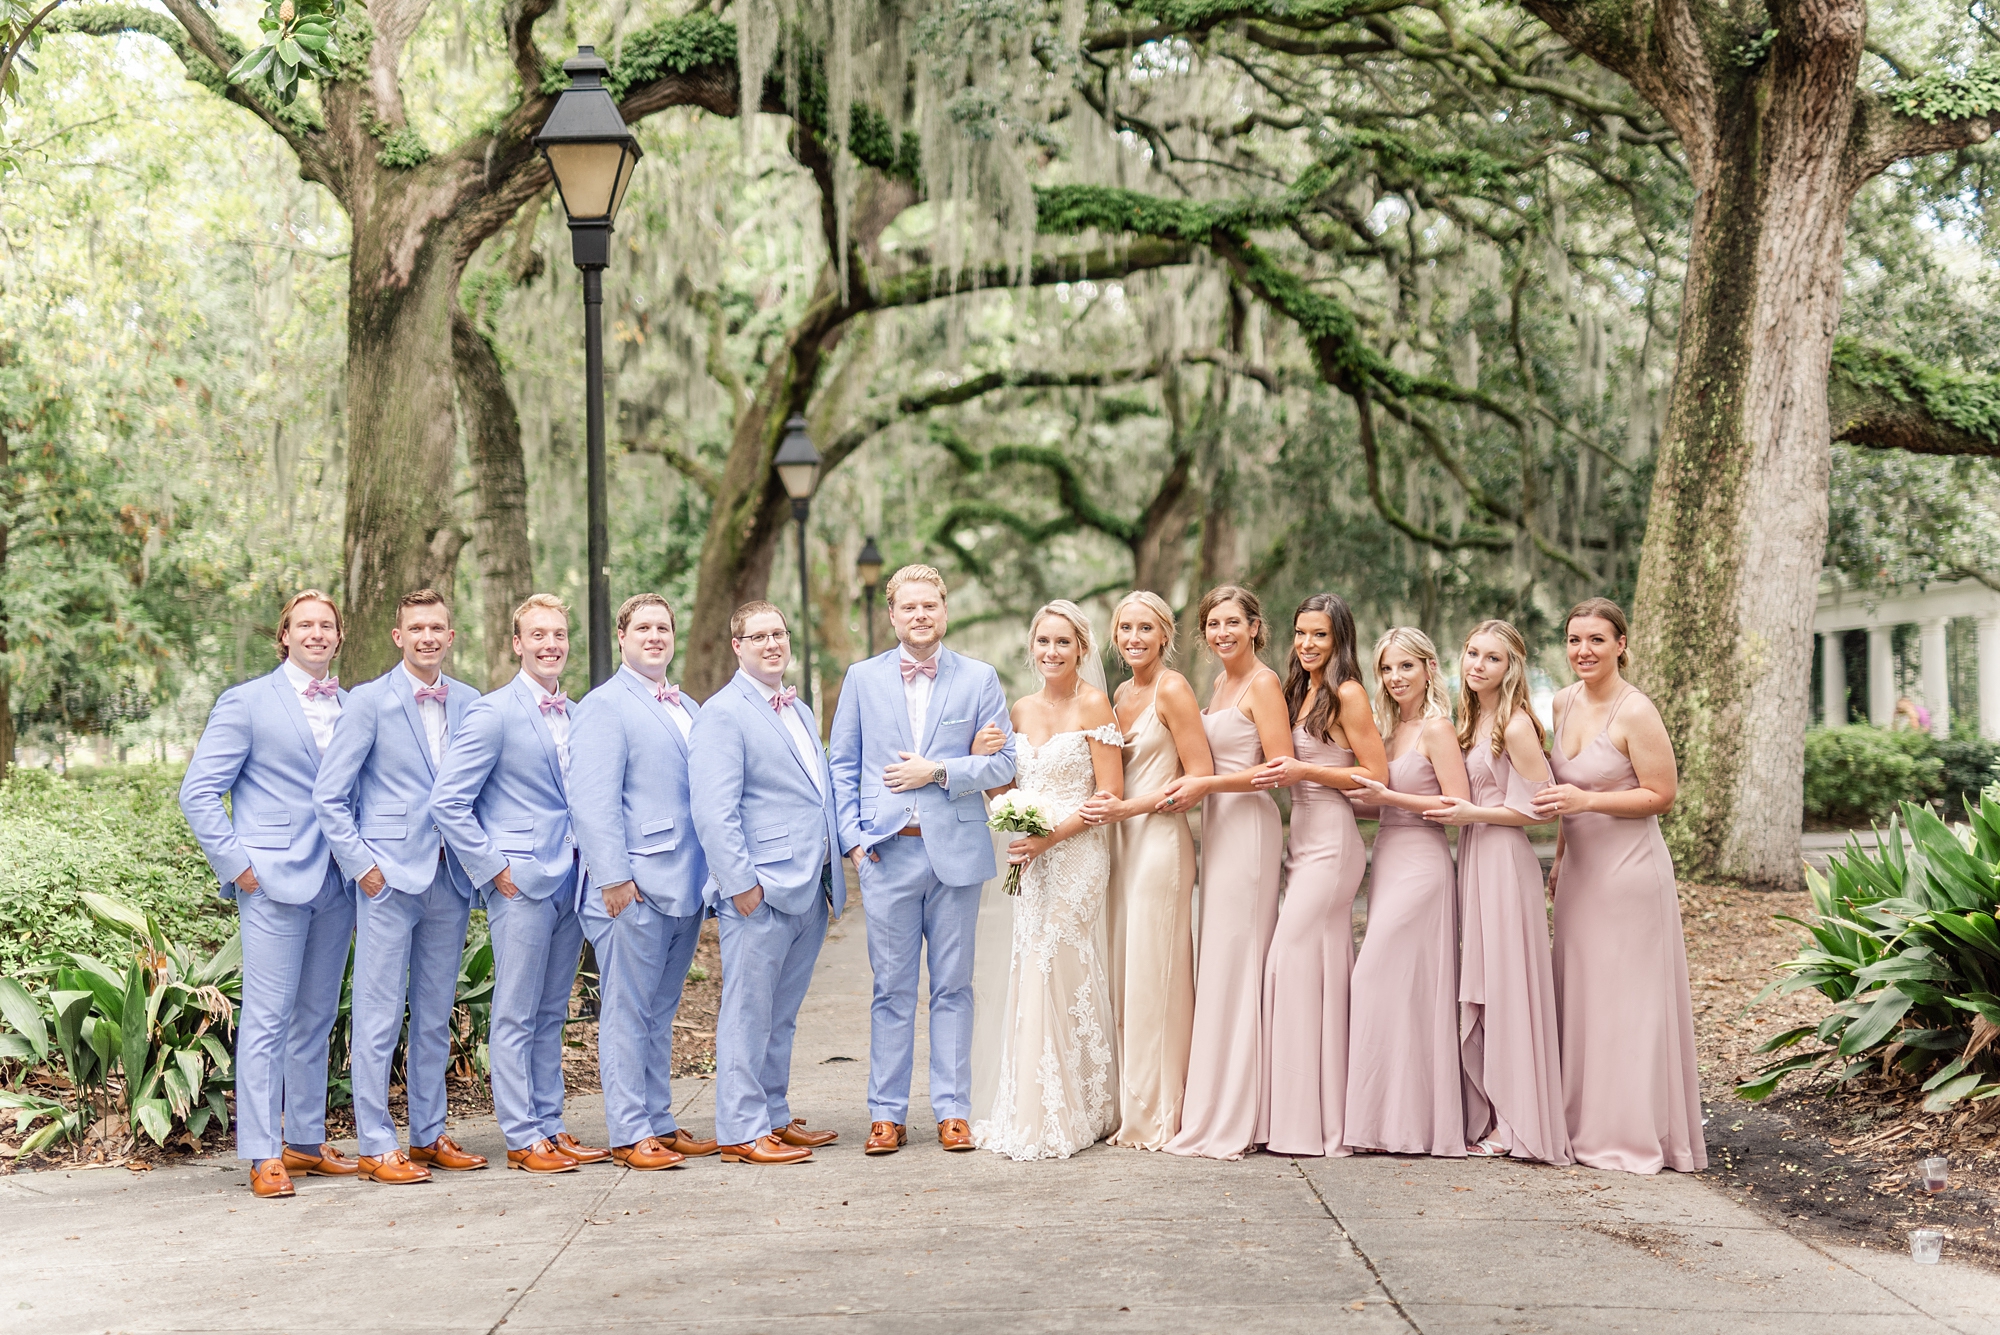 Savannah GA wedding party poses under Spanish moss